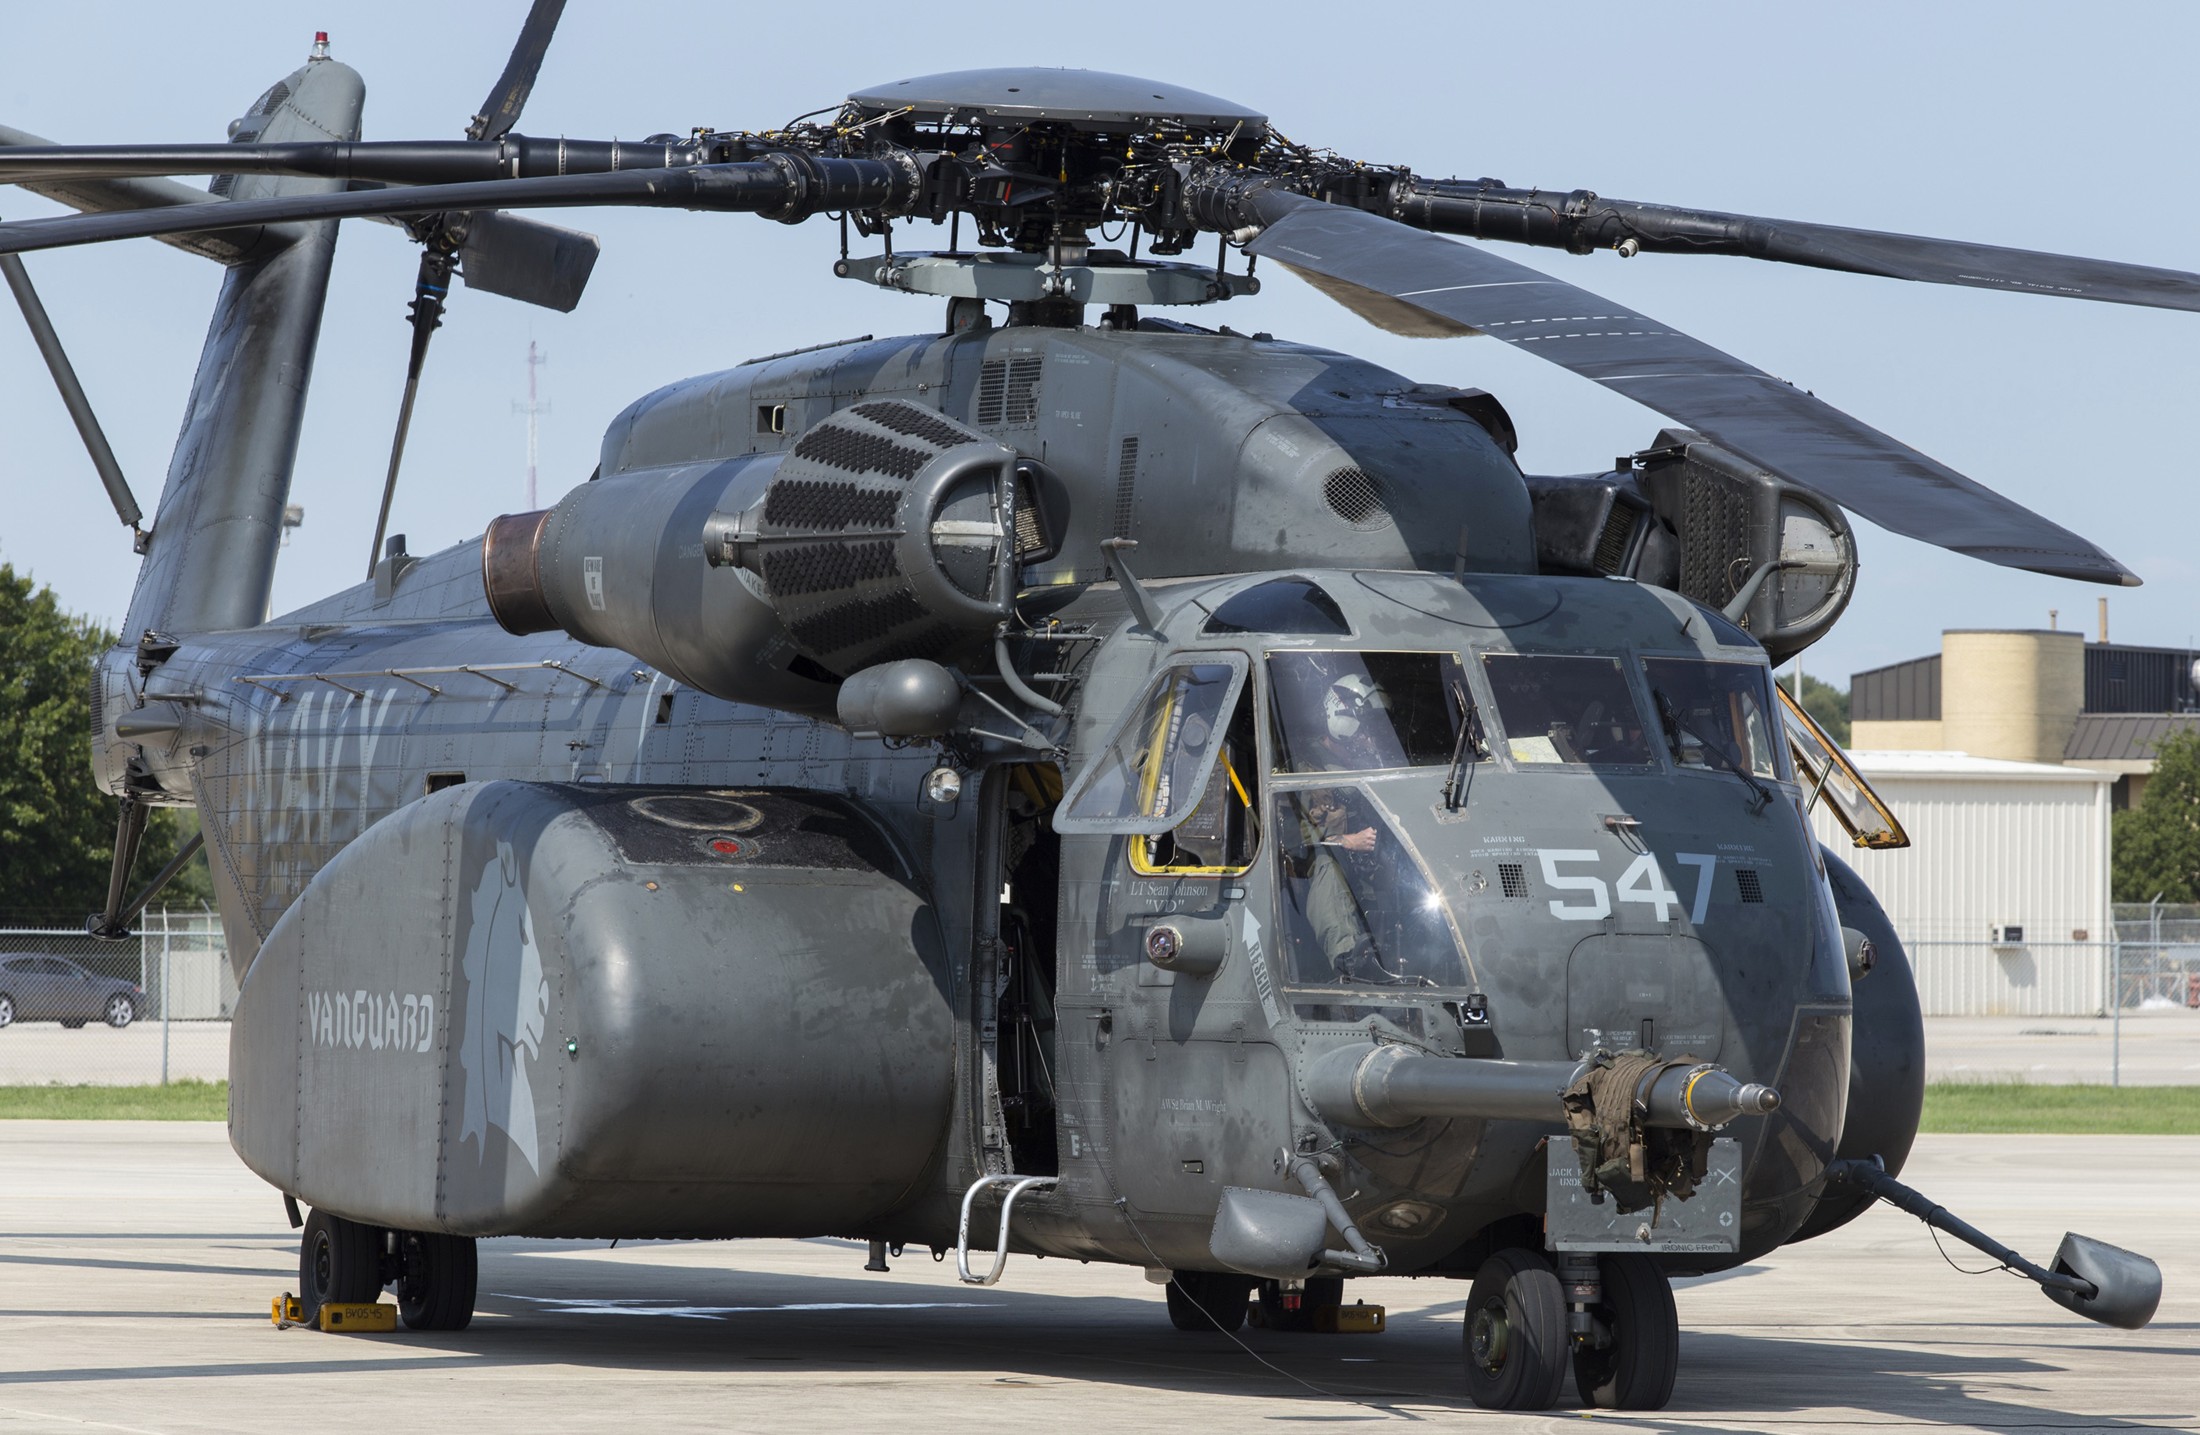 hm-14 vanguard helicopter mine countermeasures squadron navy mh-53e sea dragon 137 lackland texas